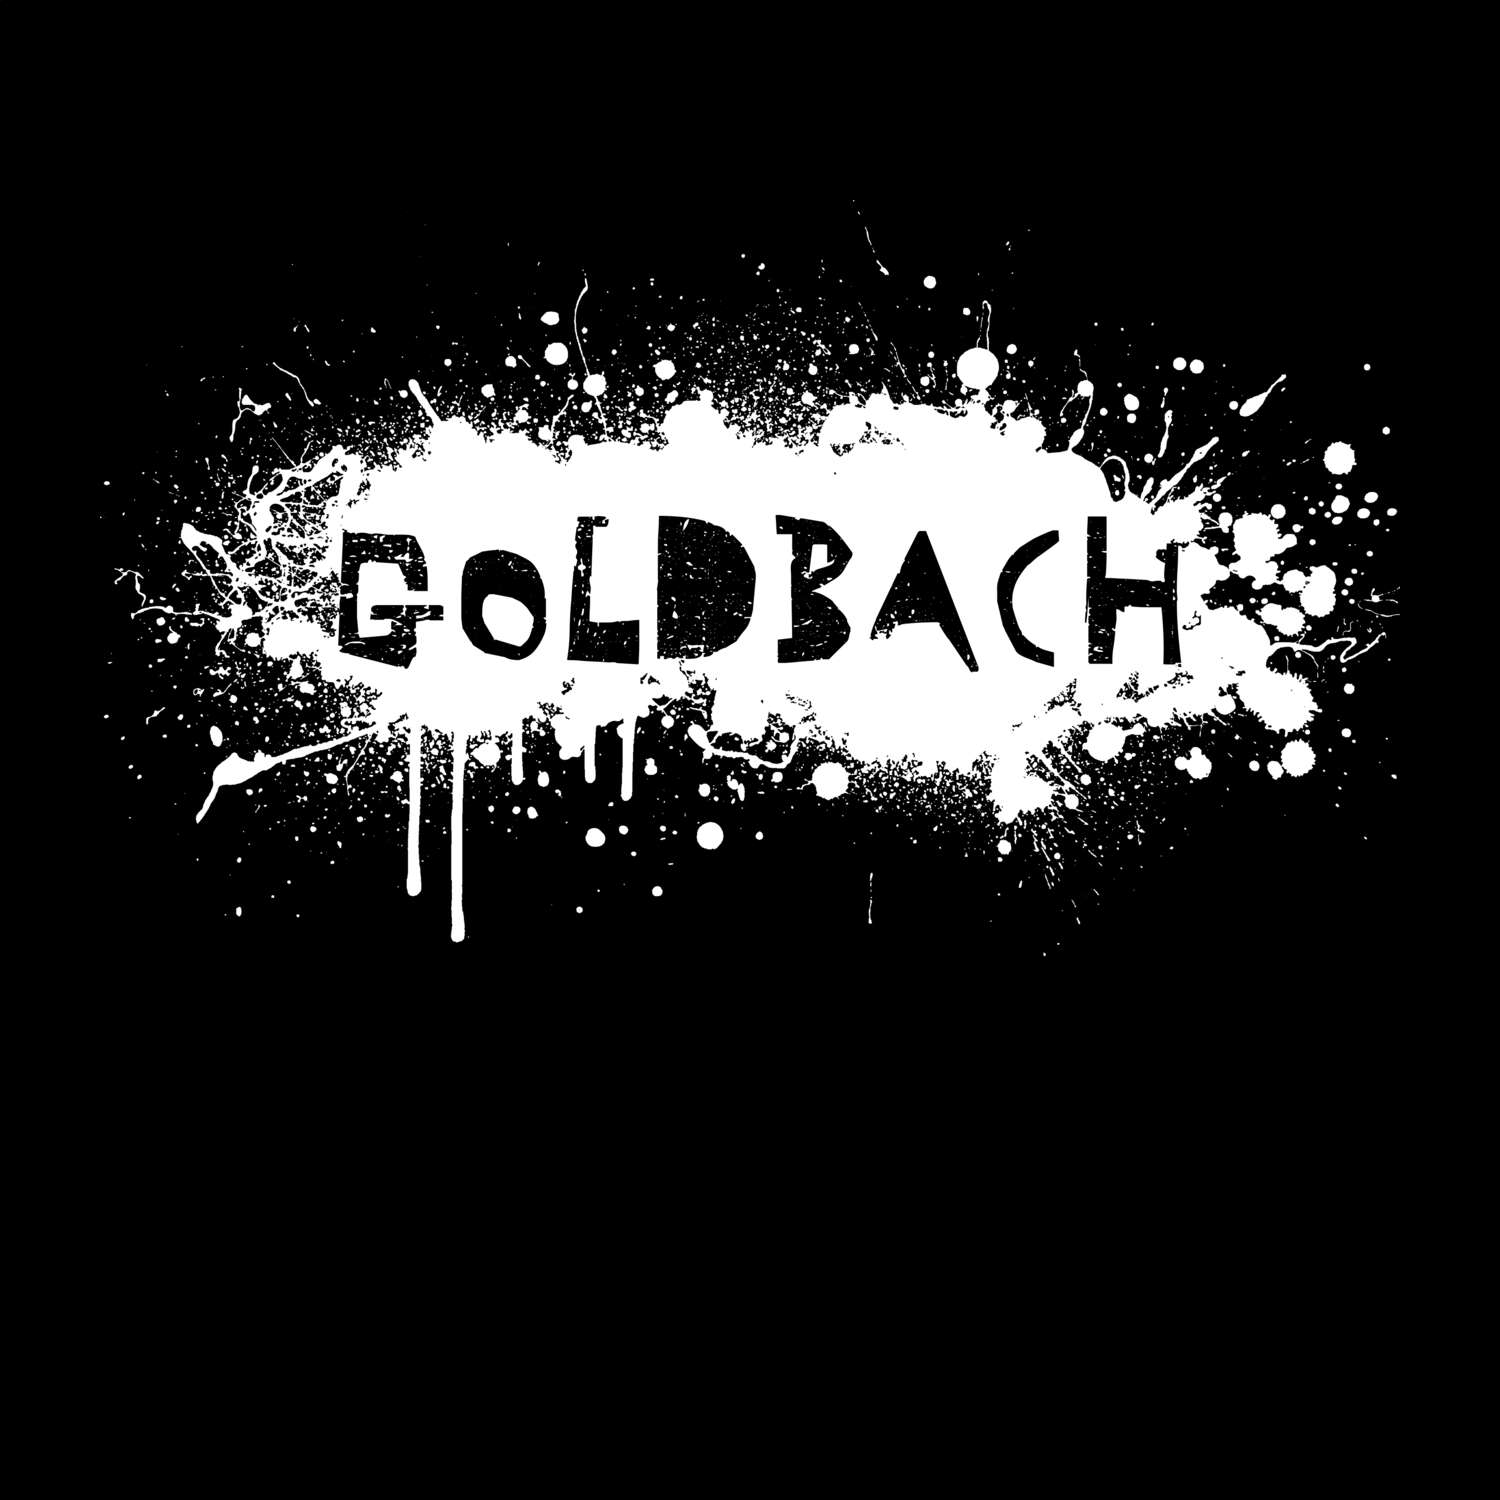 Goldbach T-Shirt »Paint Splash Punk«